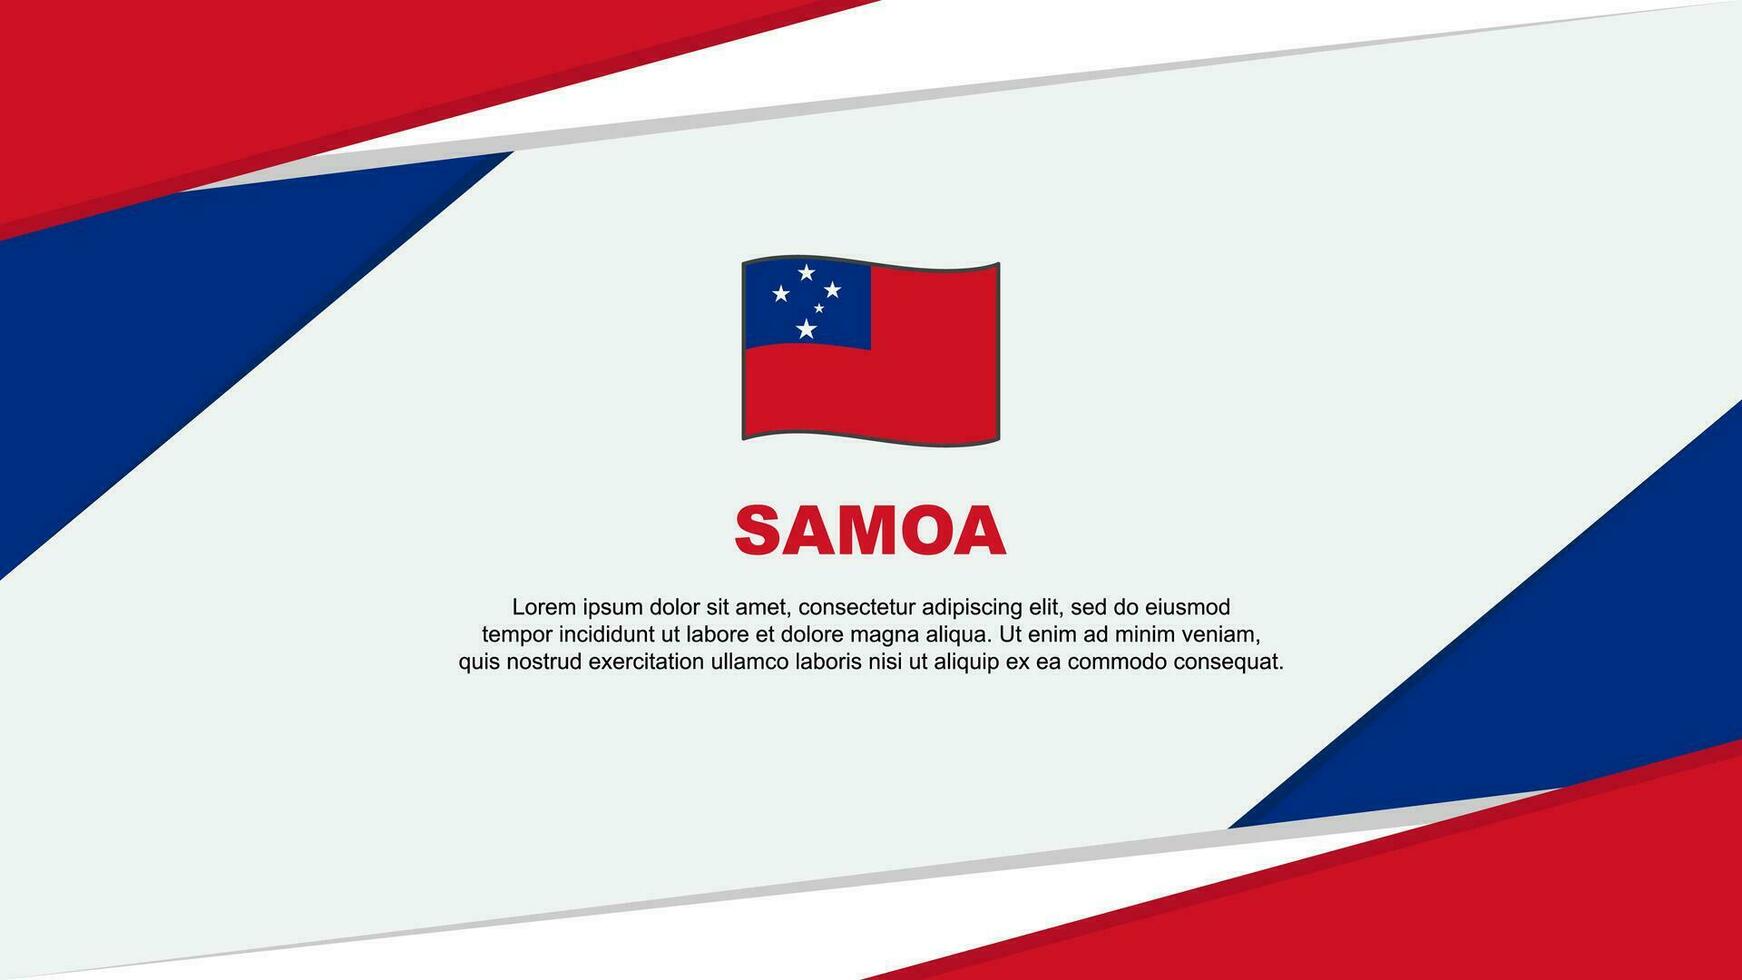 Samoa Flag Abstract Background Design Template. Samoa Independence Day Banner Cartoon Vector Illustration. Samoa